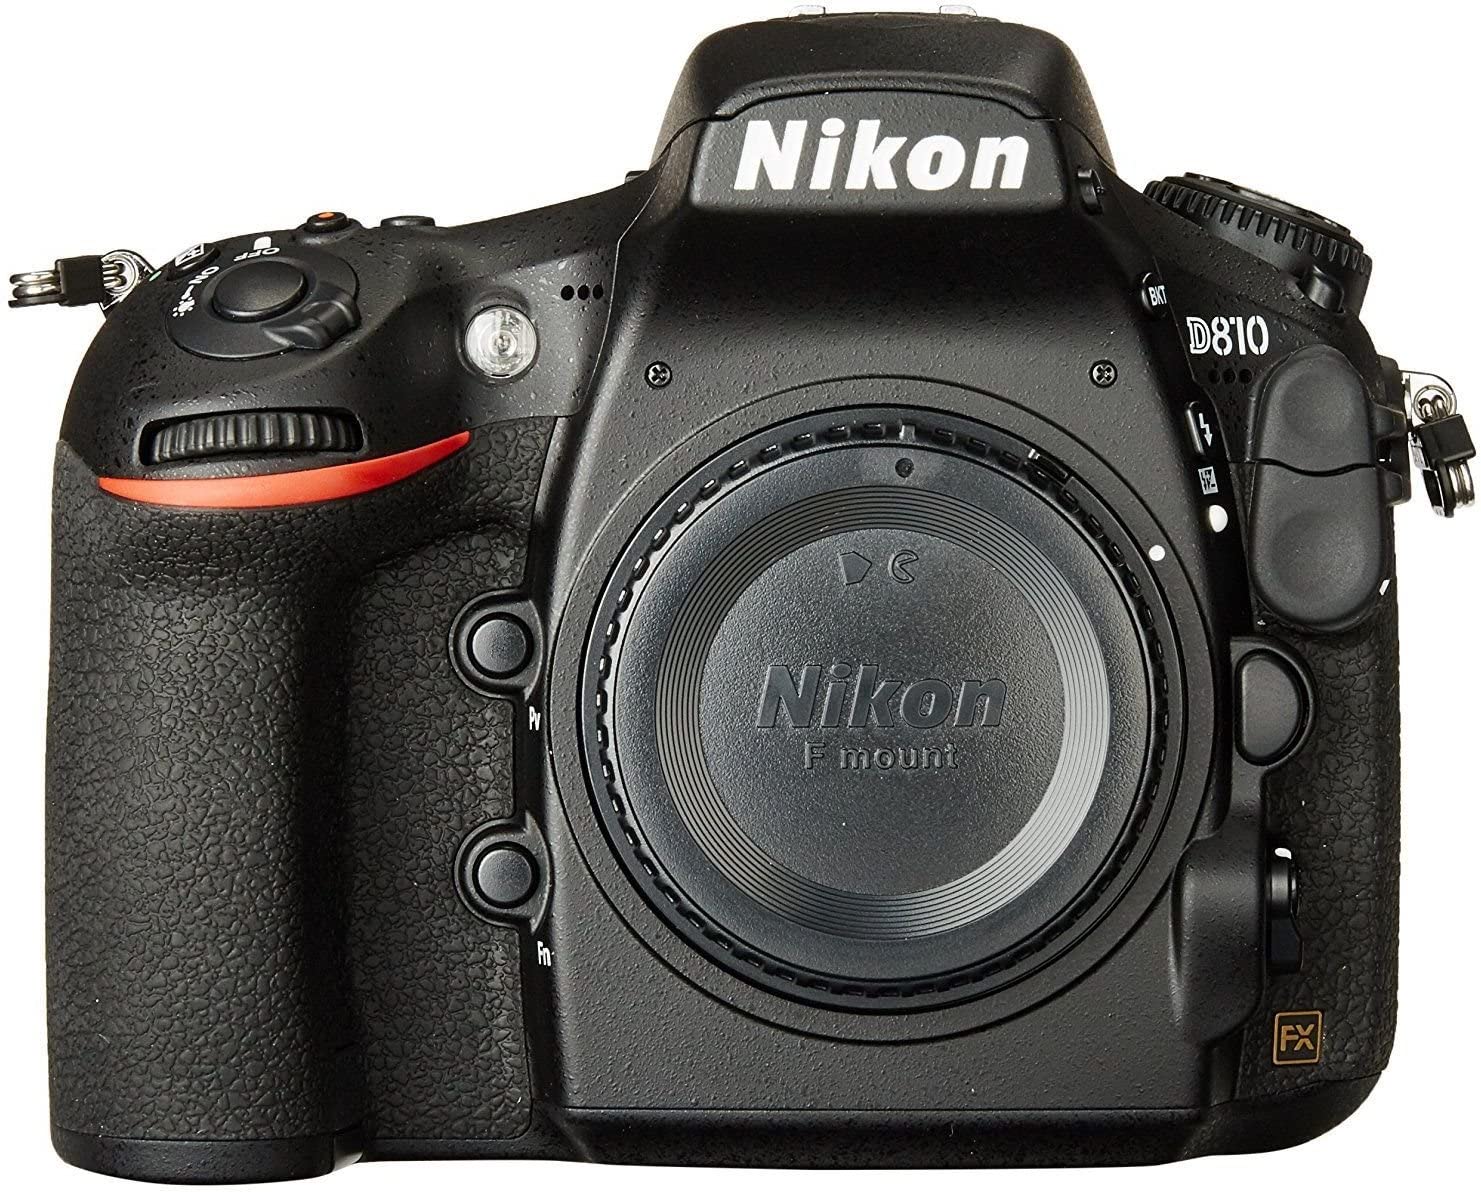 Nikon D810 Camera Image